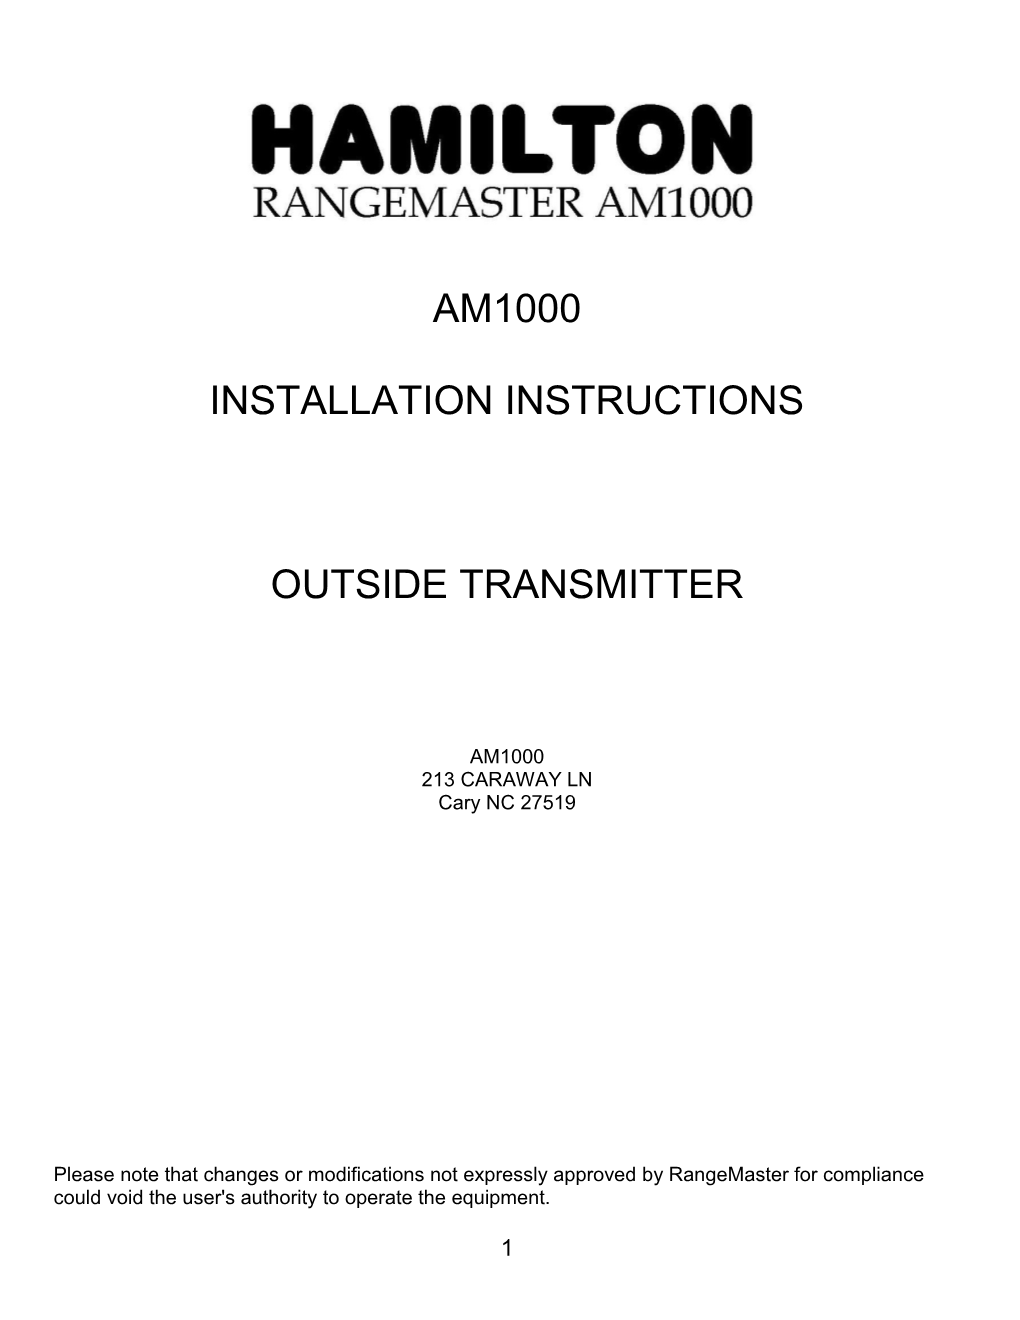 Installing the Hamilton Design AM1000 Transmitter